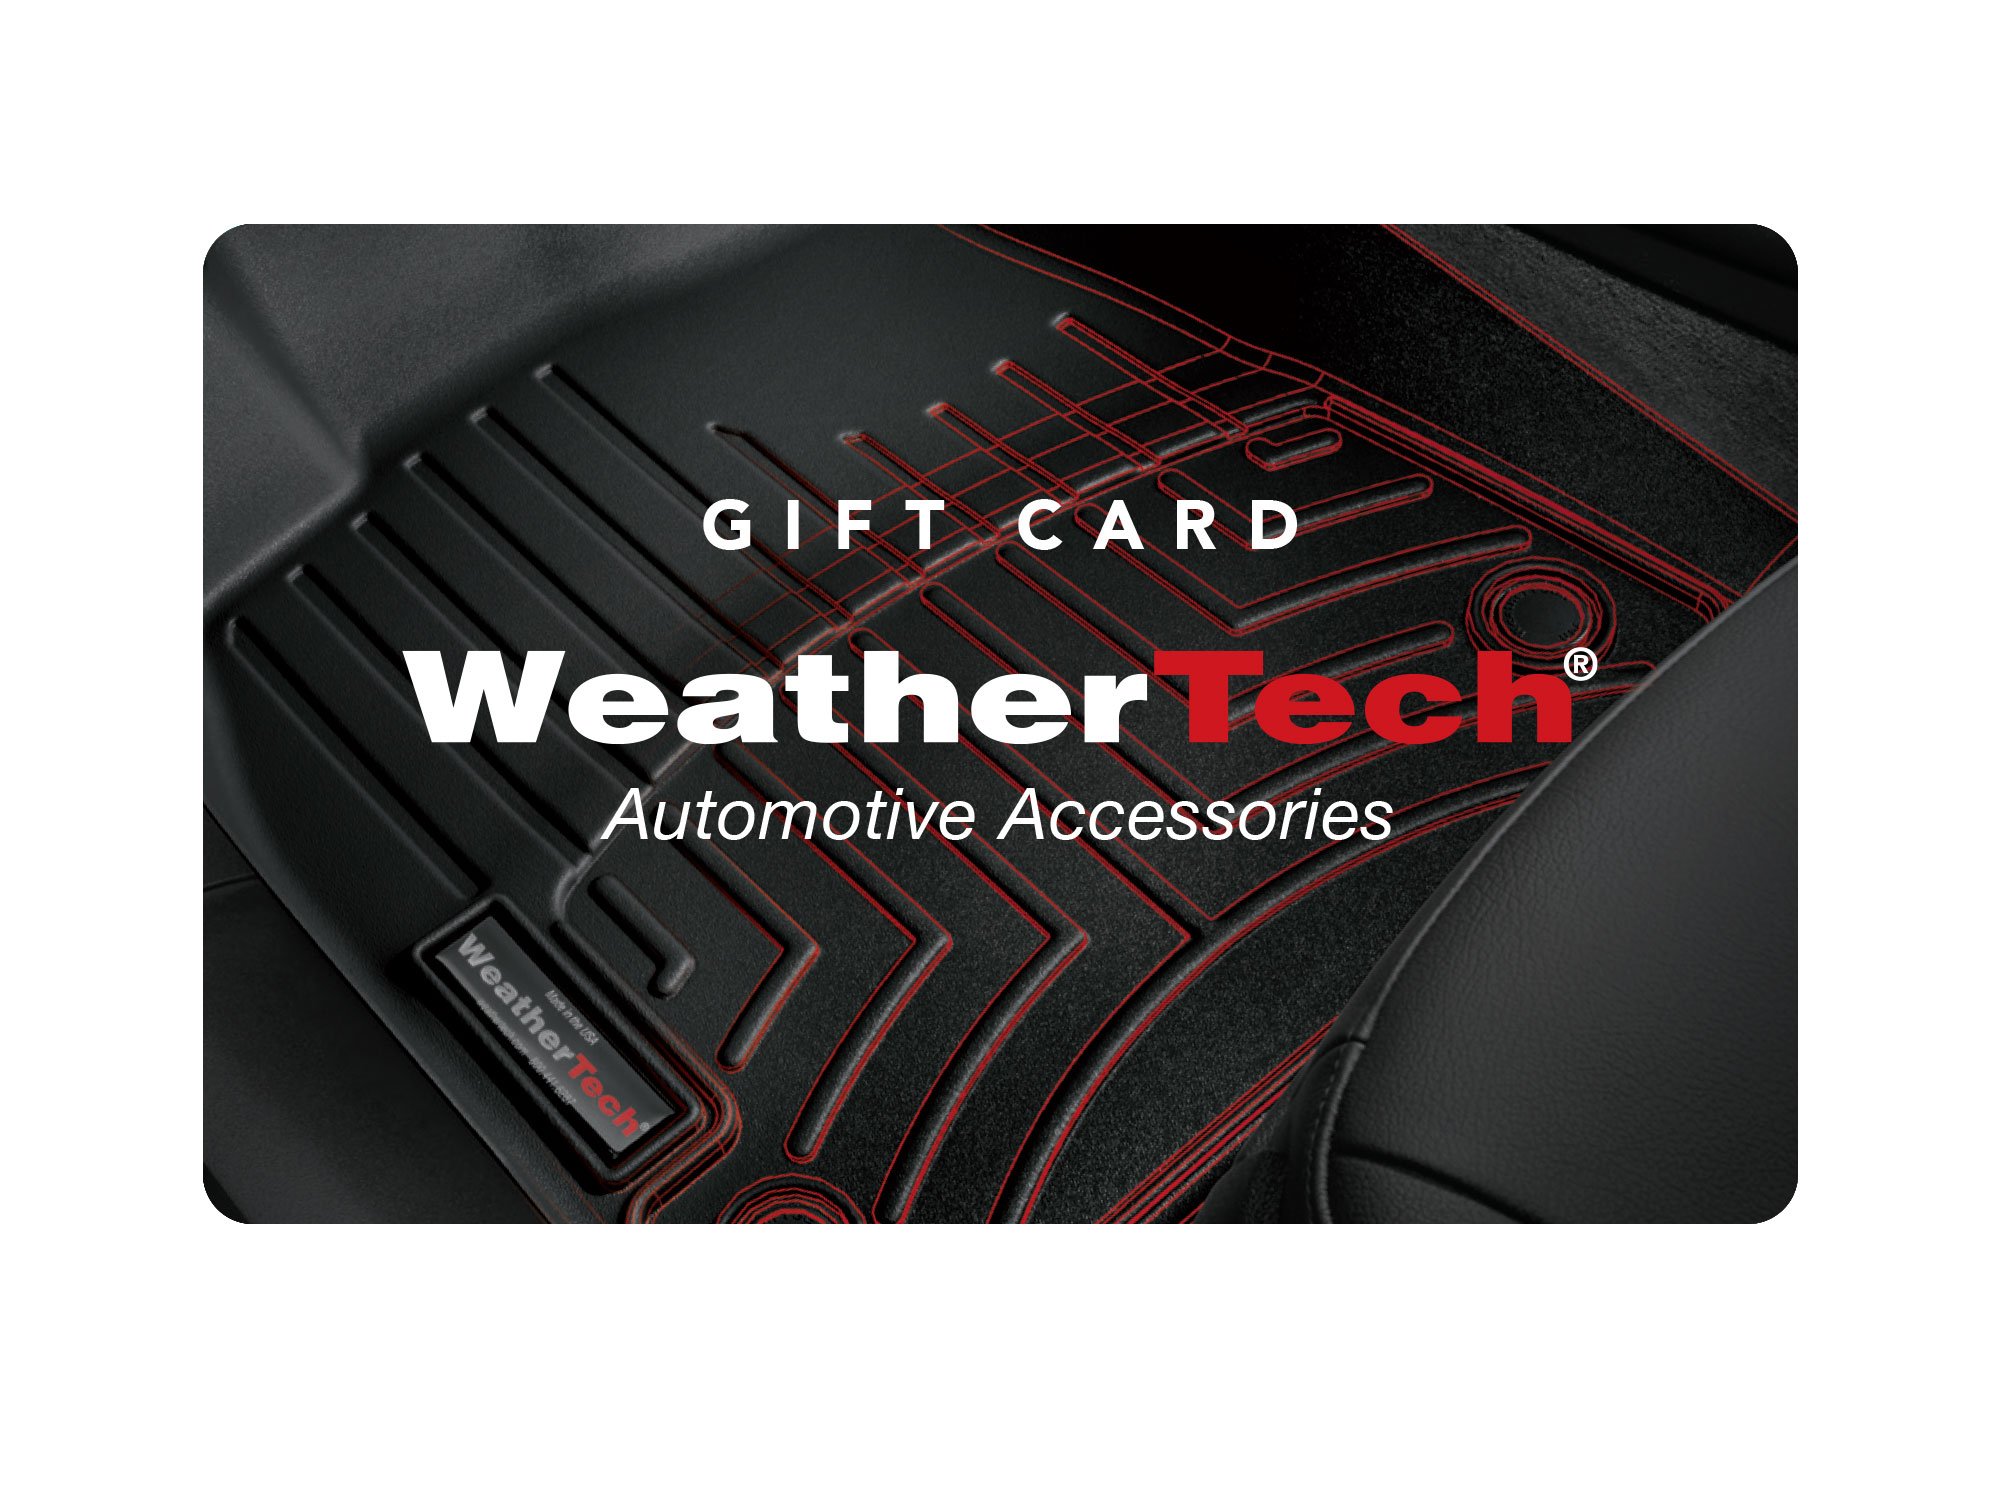 Weathertech $250 eGift Card US $186.91